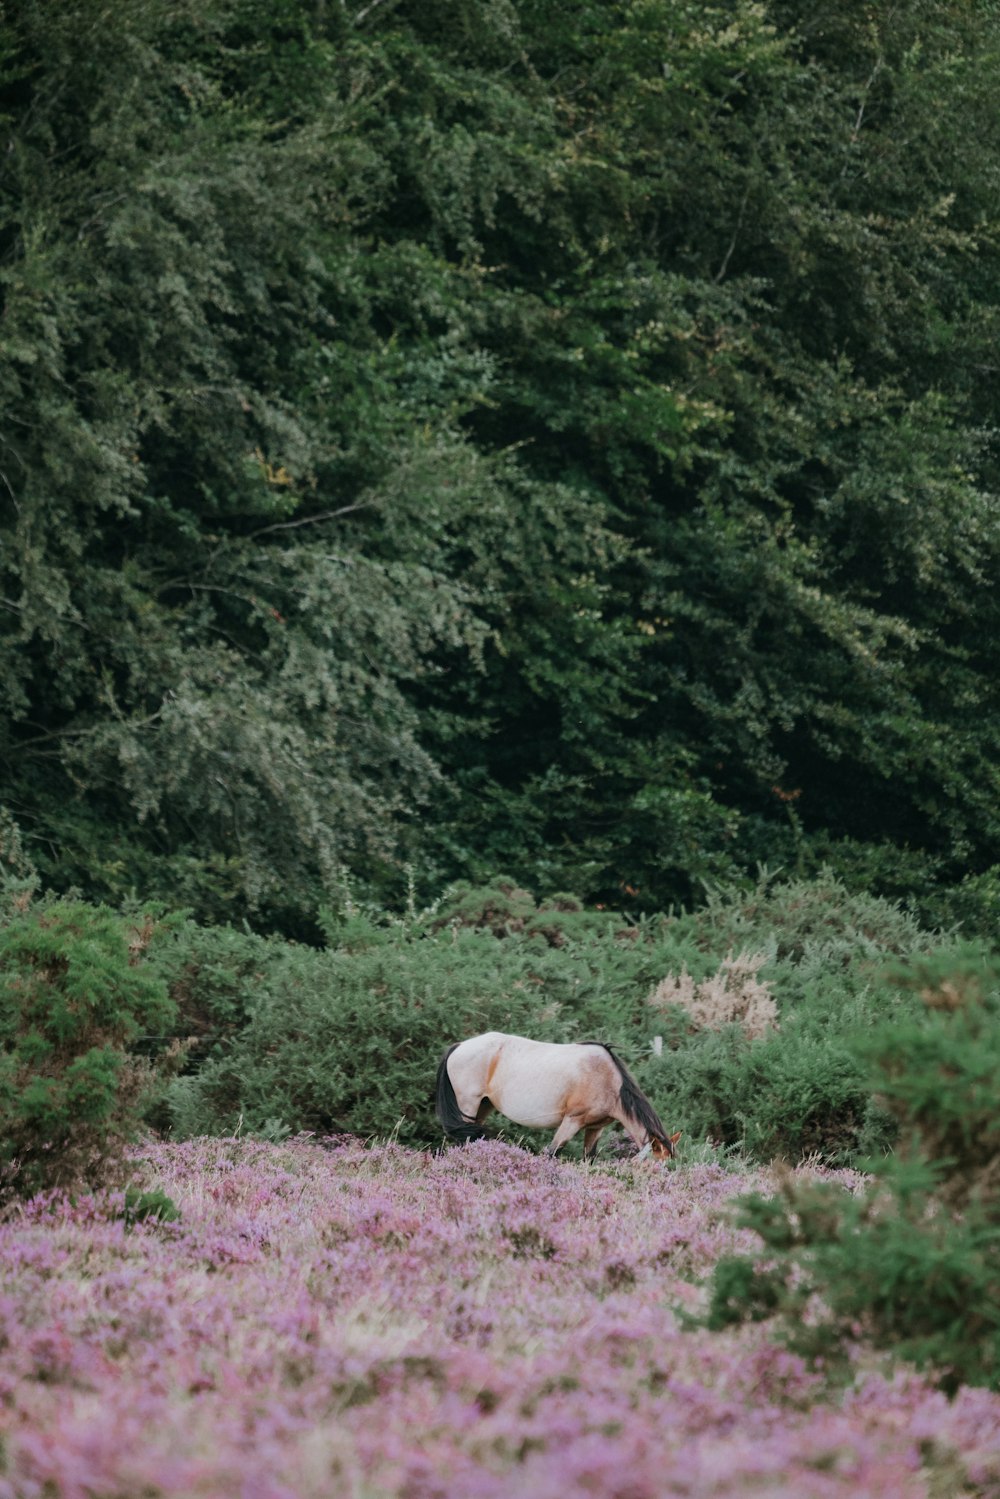 beige horse standing on grass field